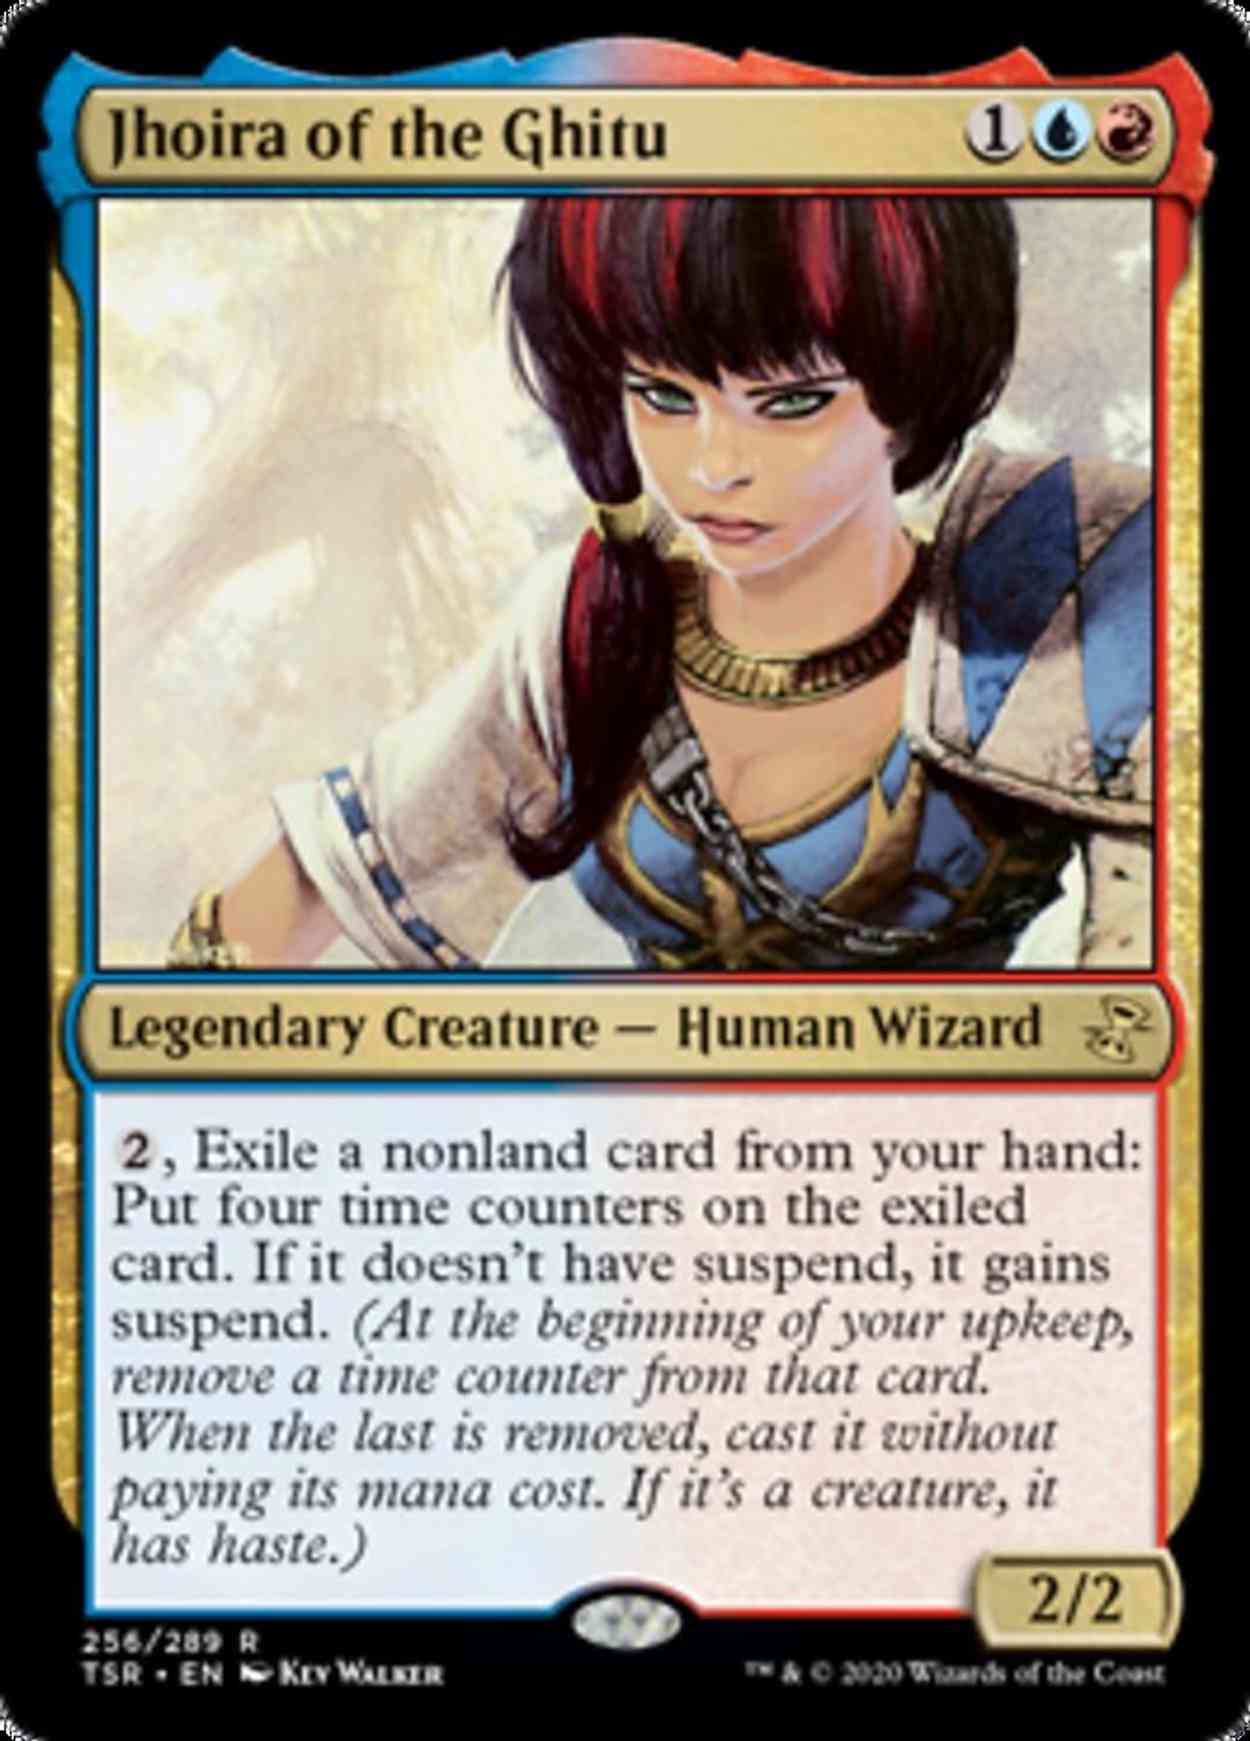 Jhoira of the Ghitu magic card front